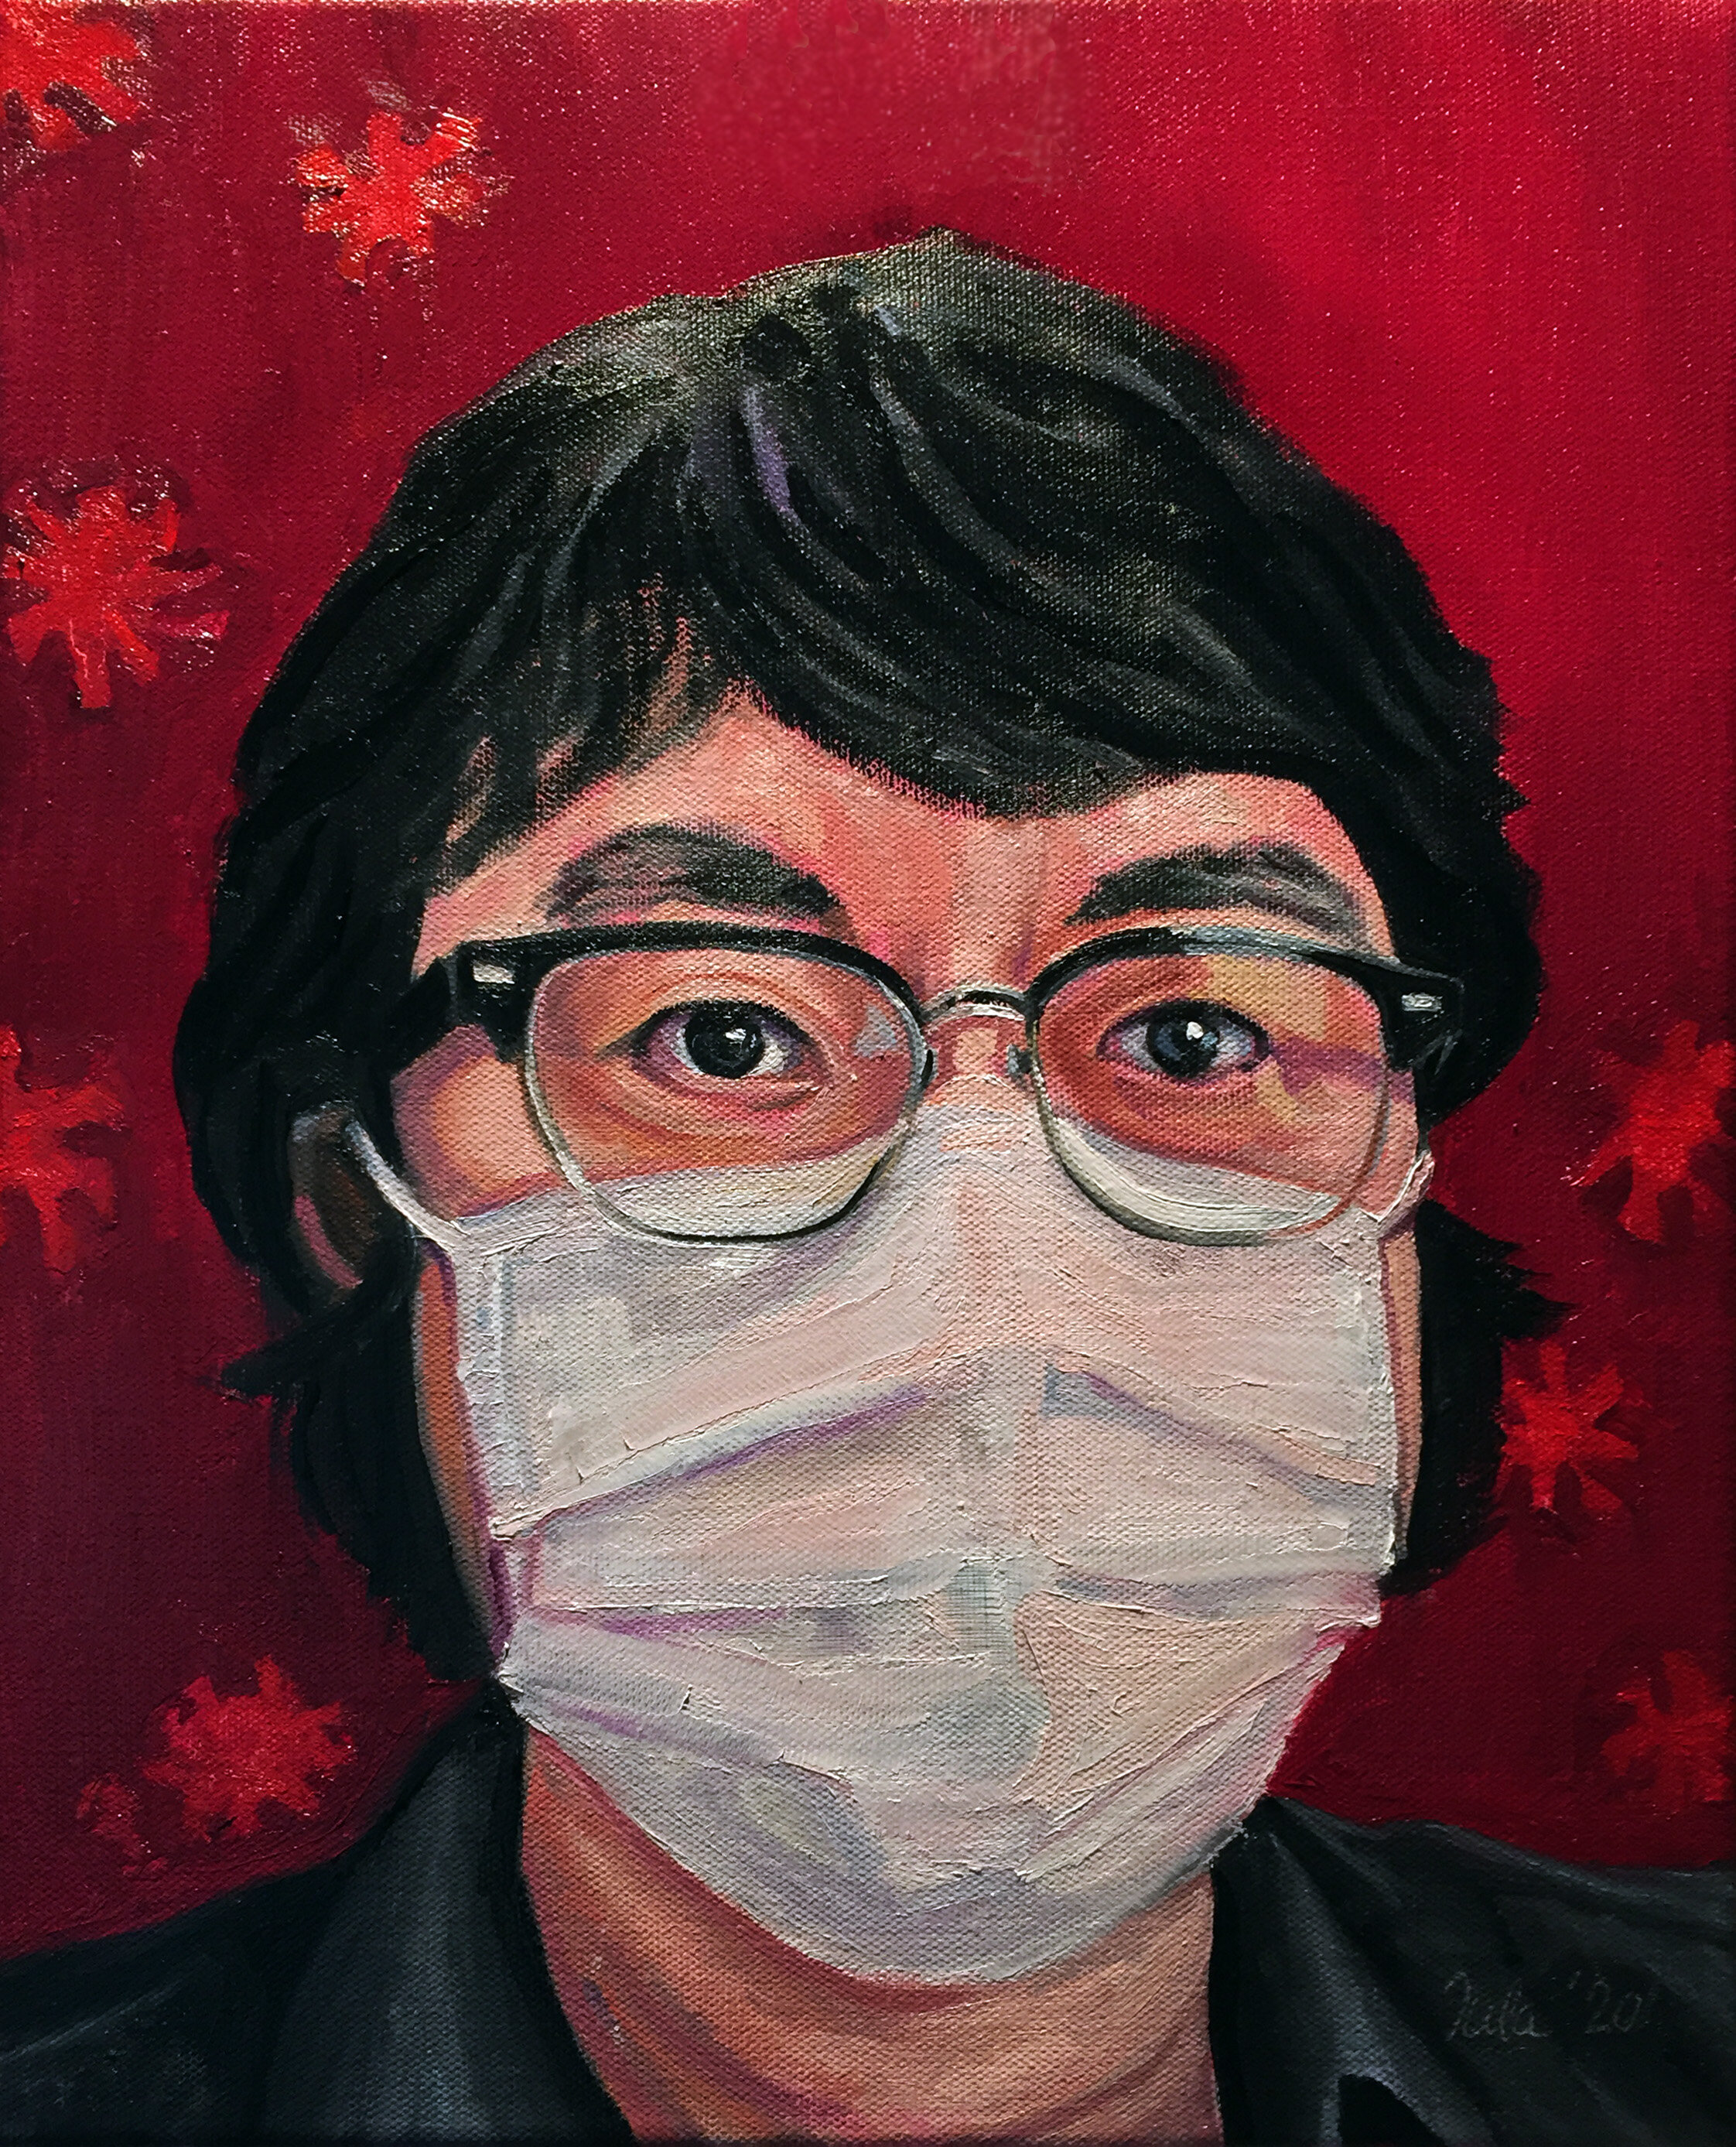 Global Pandemic Portrait #3- Tokyo, Japan- The Professor- Copyright 2020